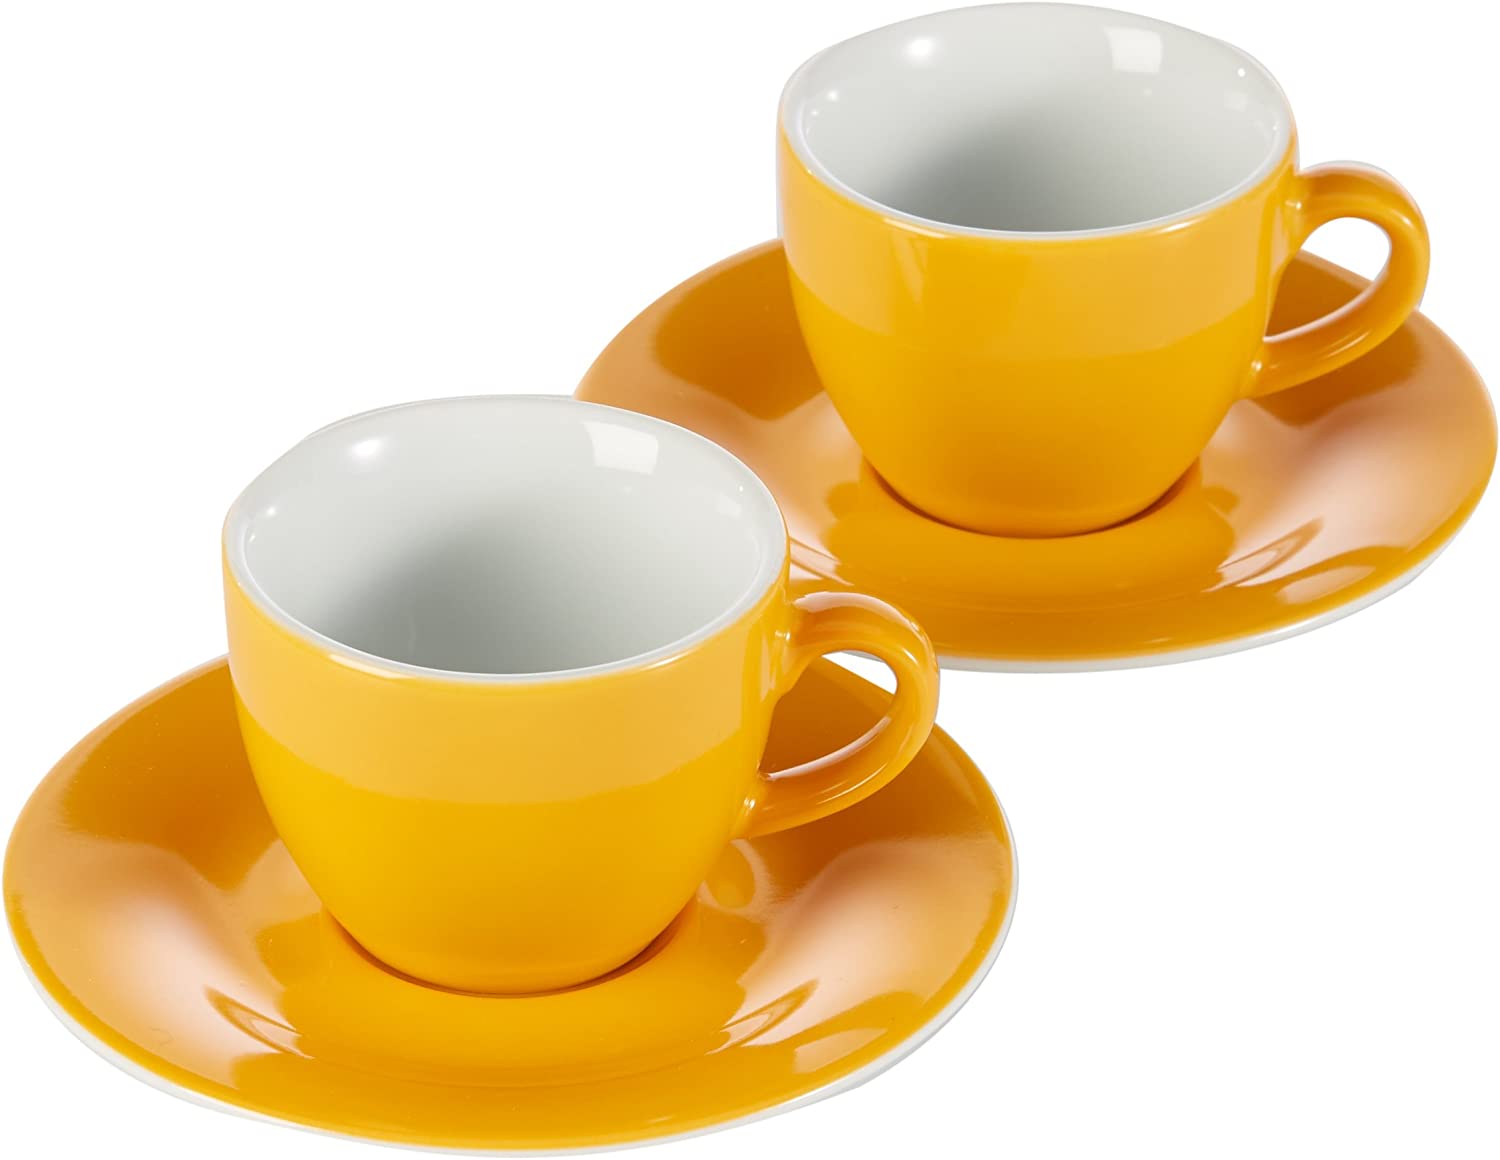 Kahla Pronto 57D167A72767C Espresso Cups Set of 4 Orange / Yellow